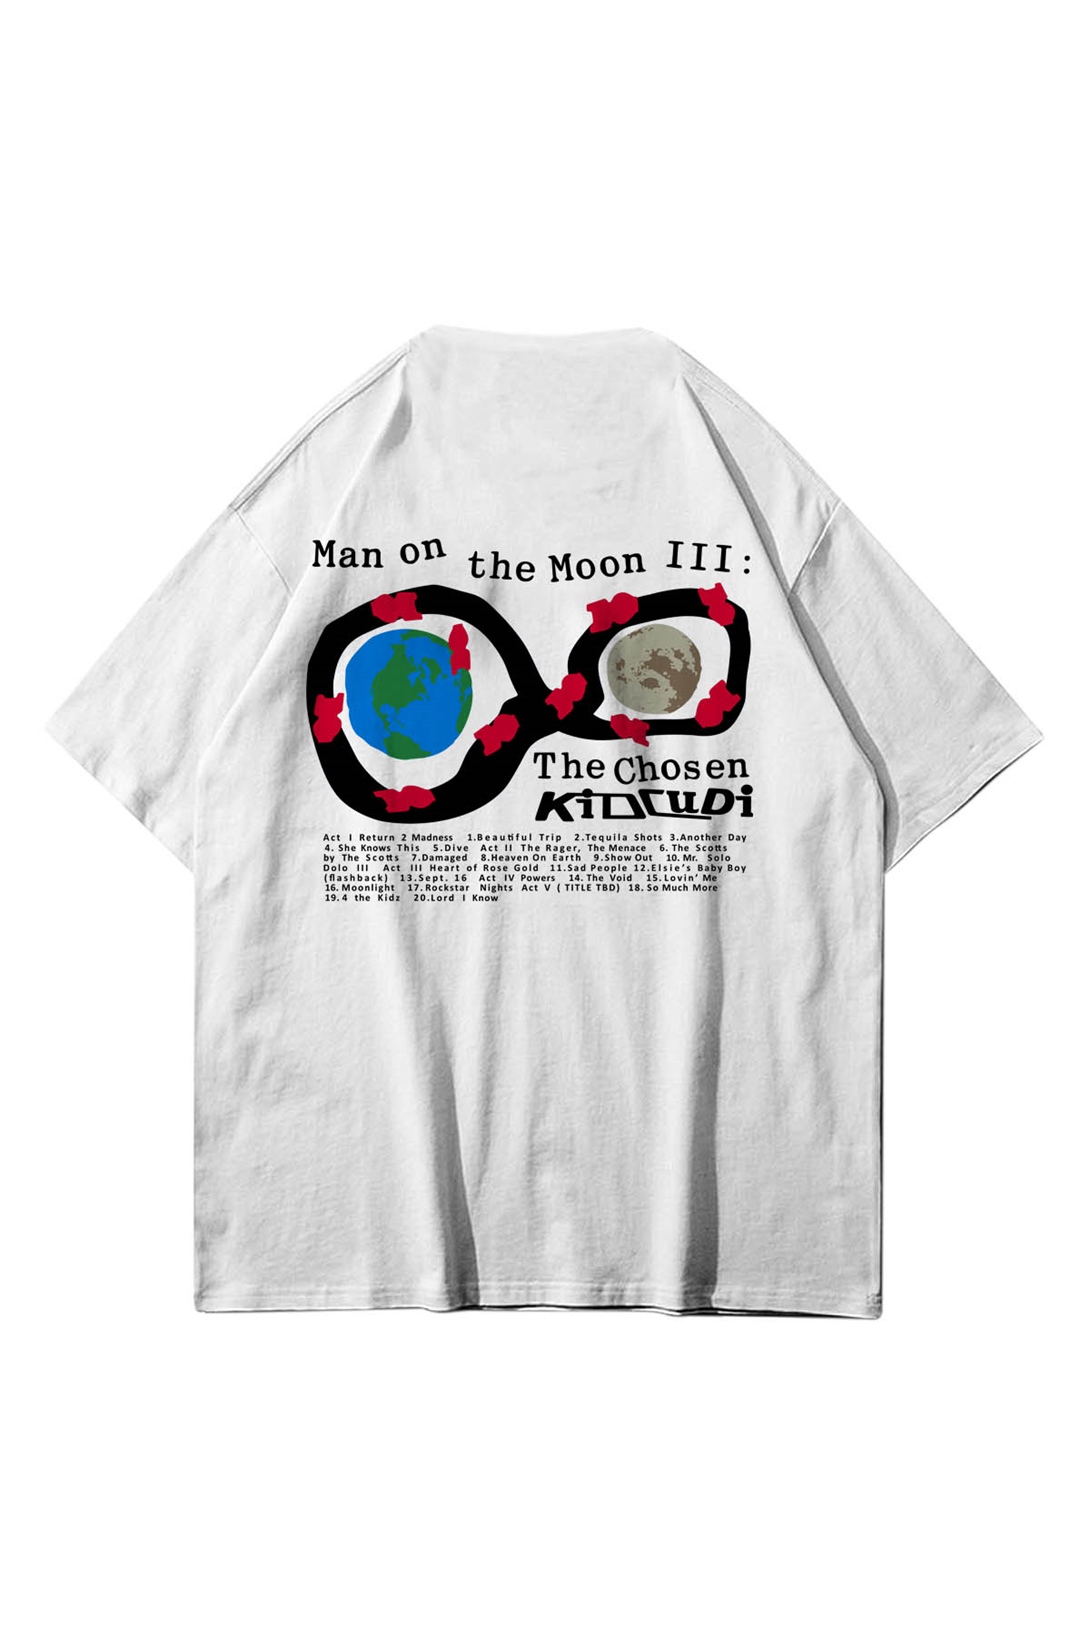 Trendiz Unisex Kid Cudi Man of the Moon 3 Beyaz Tshirt